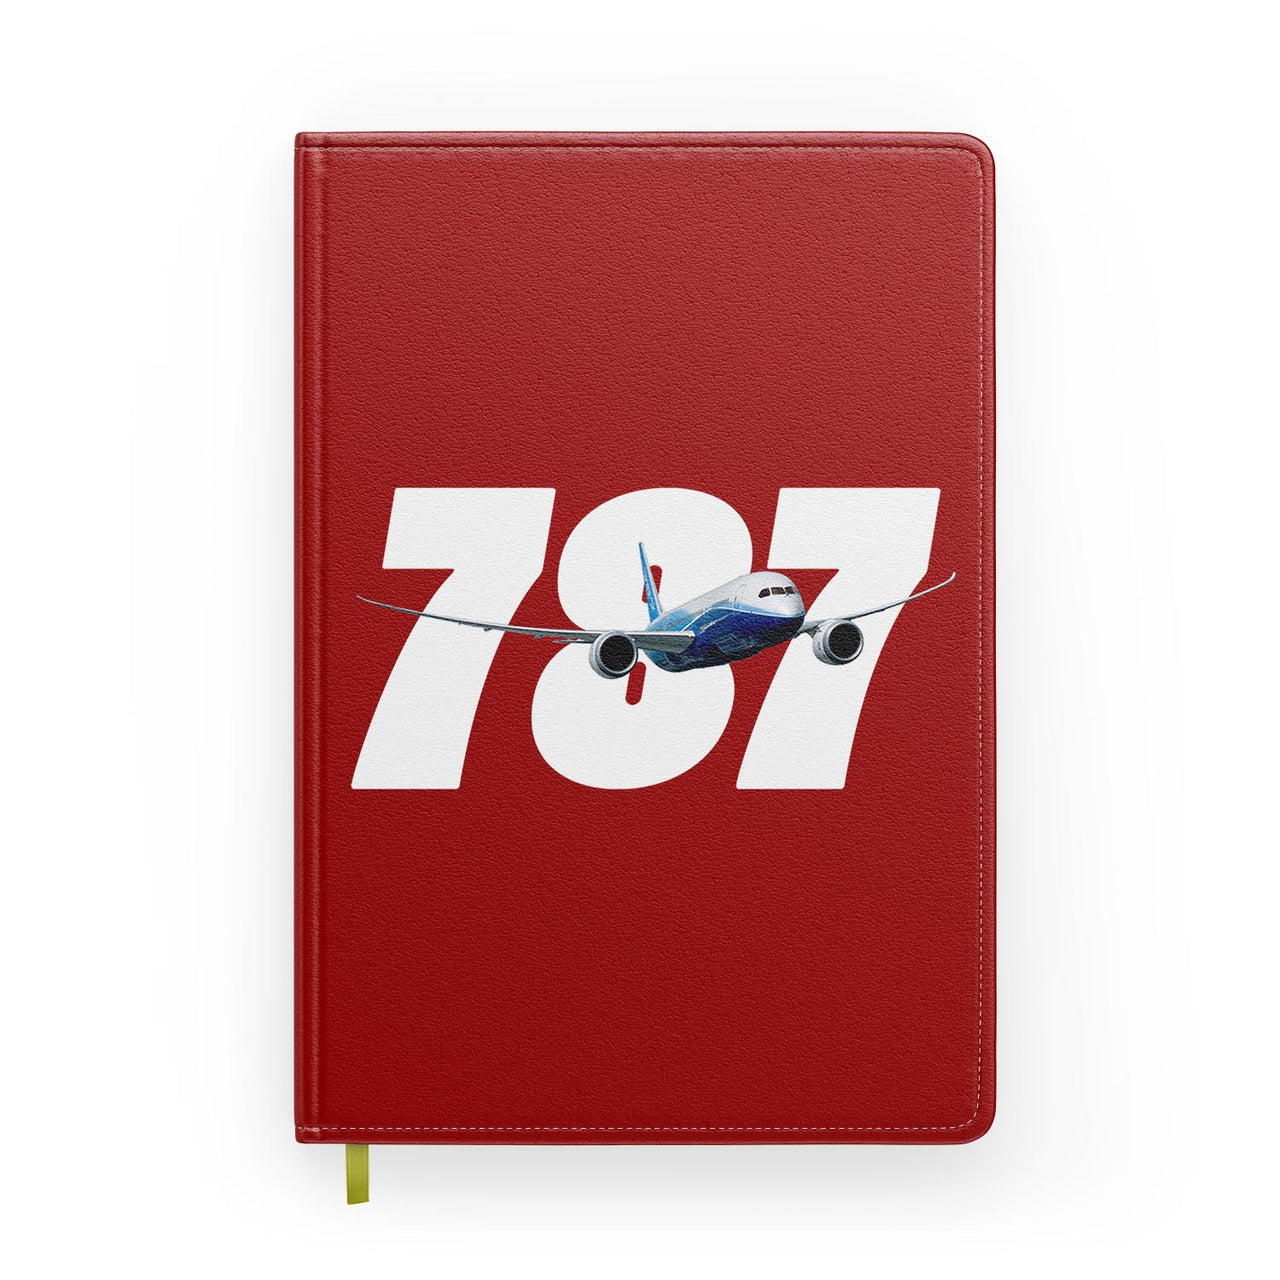 Super Boeing 787 Designed Notebooks